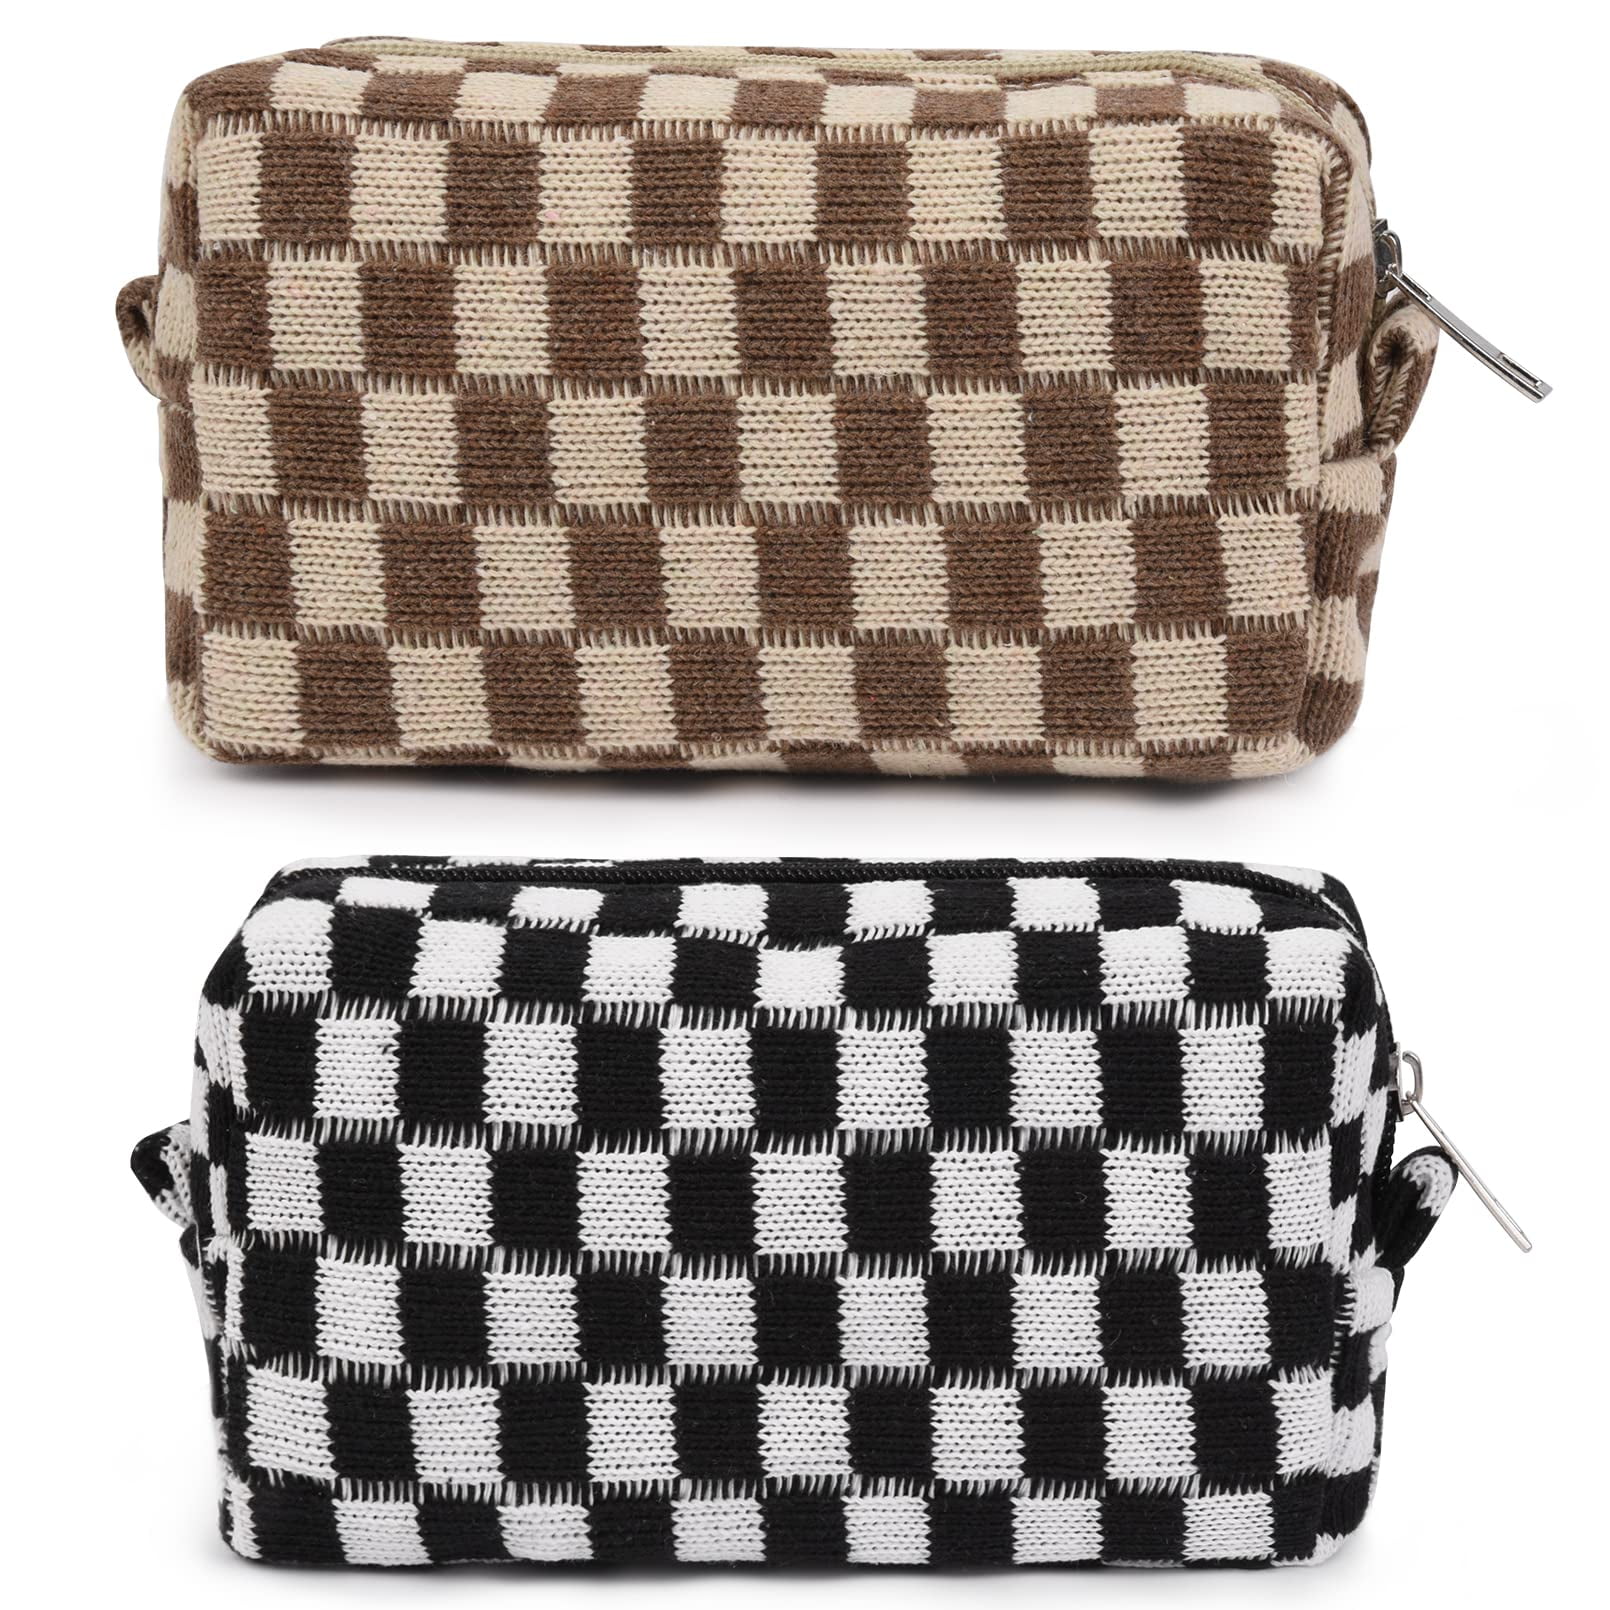  vhivhias Portable Checkered Makeup Bag Large Capacity